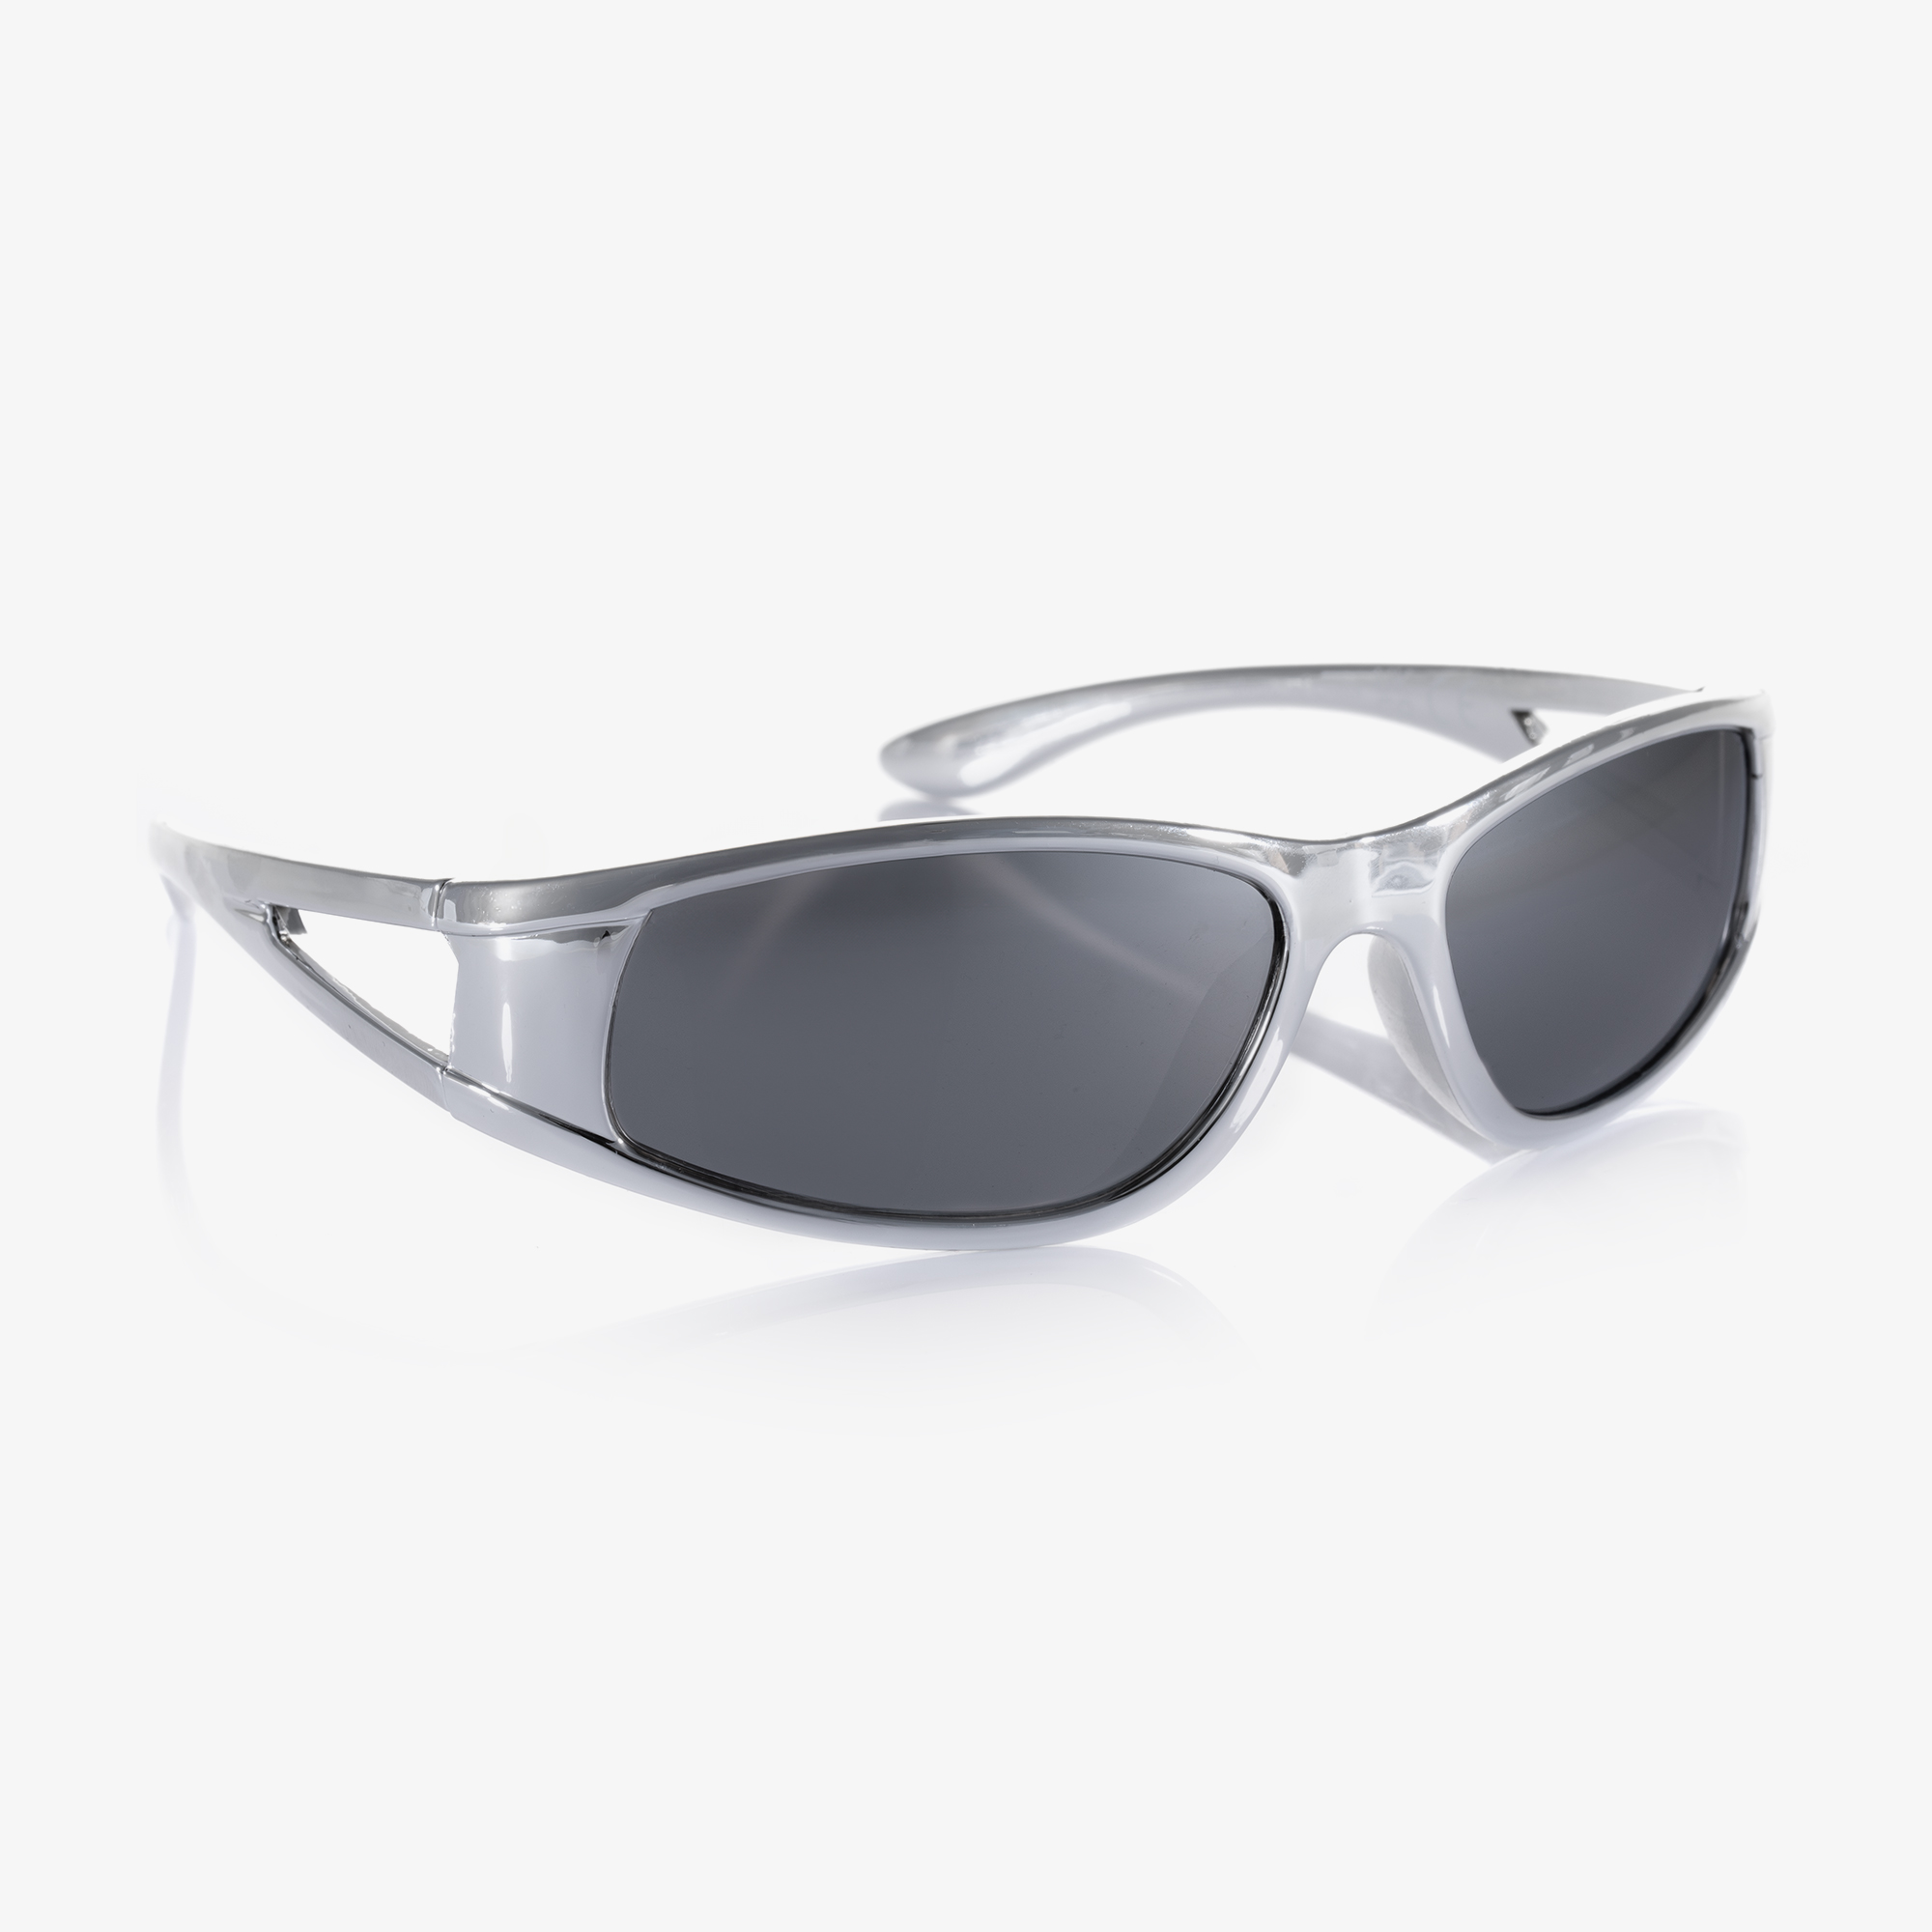 GetUSCart- Fashion Sunglasses for Women,100% UVA/UVB Protection Mirrored  Lens,FDA Standard Glasses (Tortoise & Blue, 55)